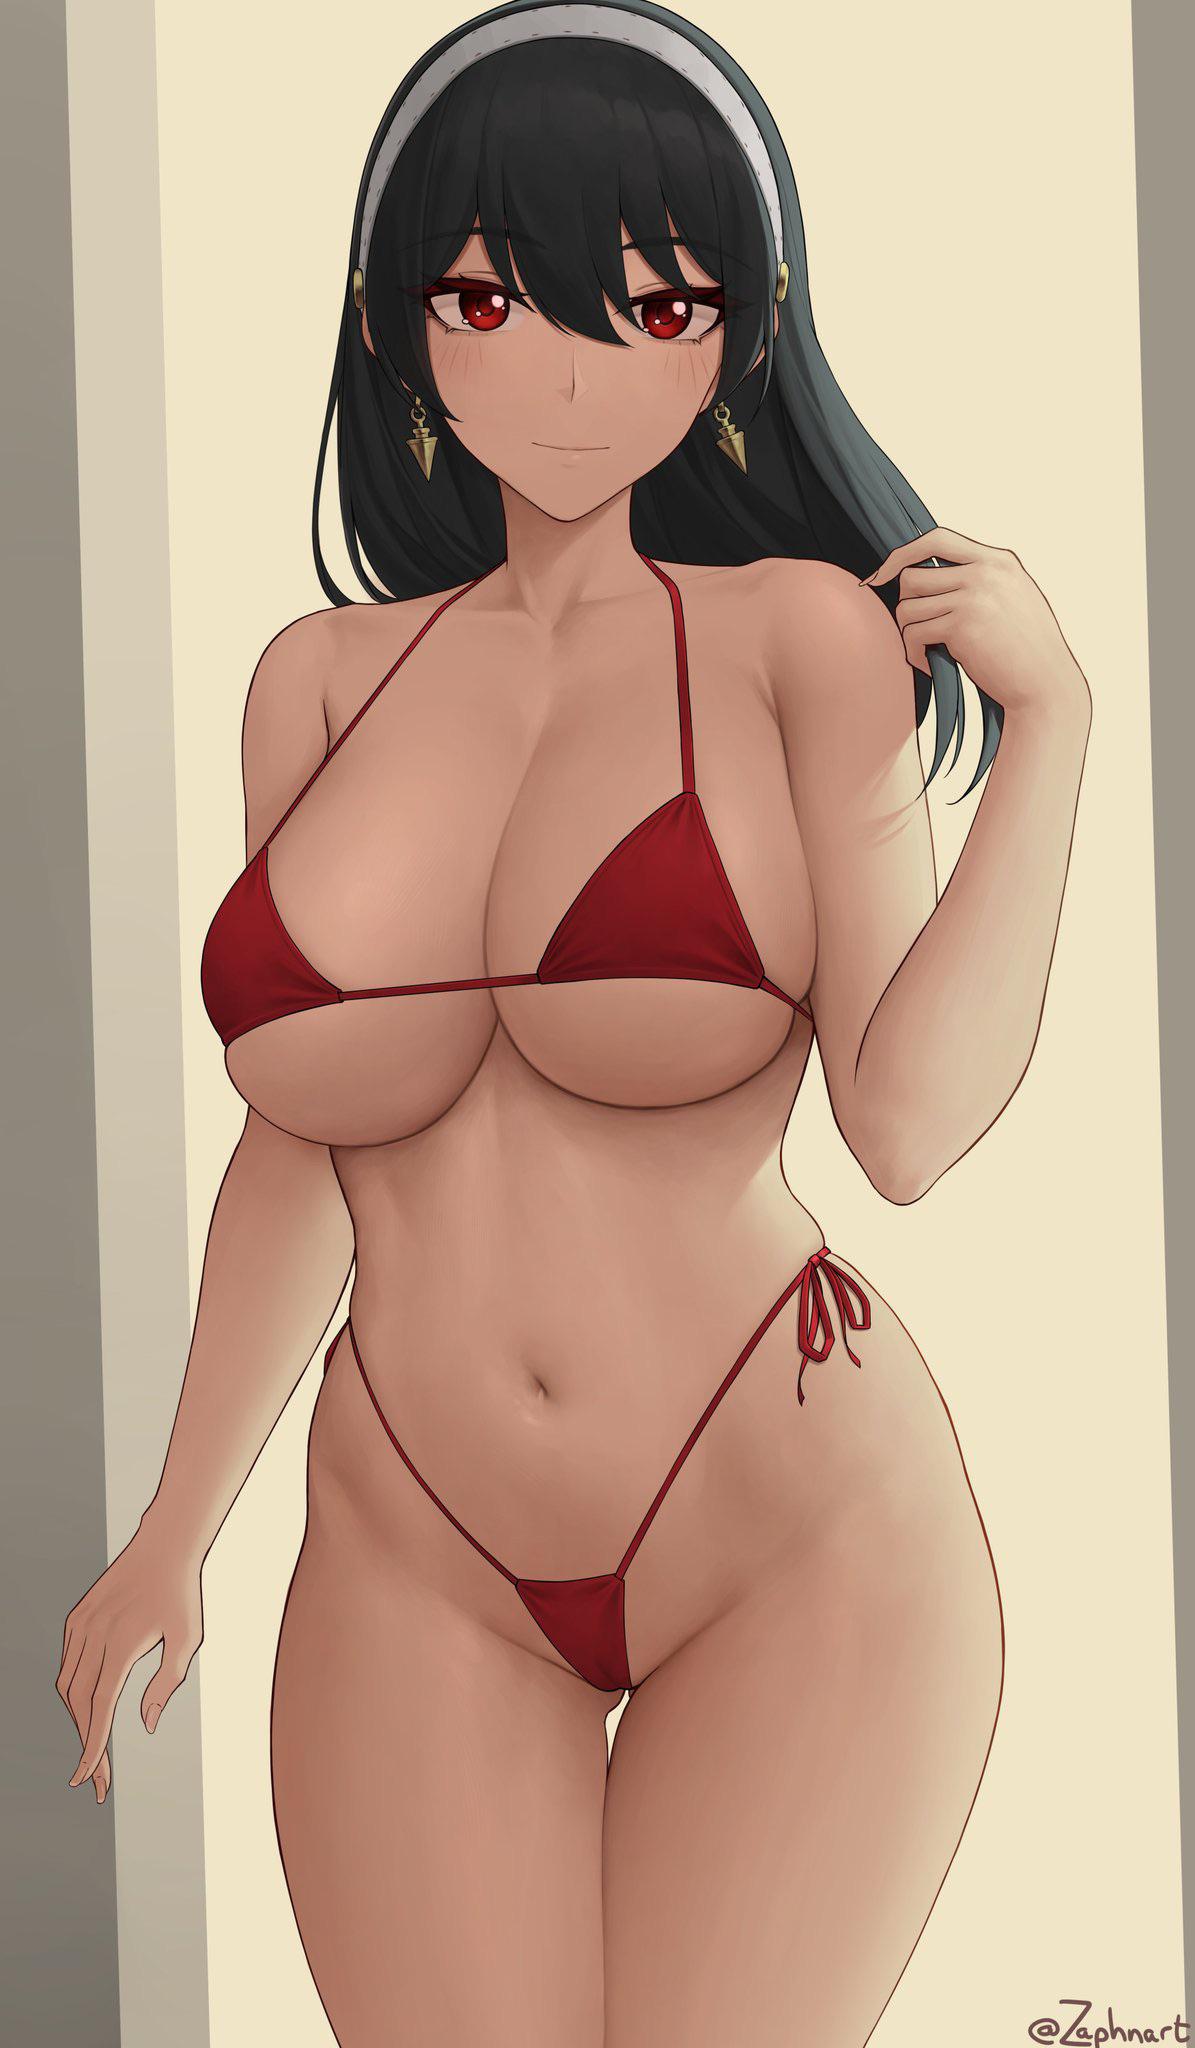 Hentai Huge Tits Tiny Bikini - Yor enjoying her new bikini